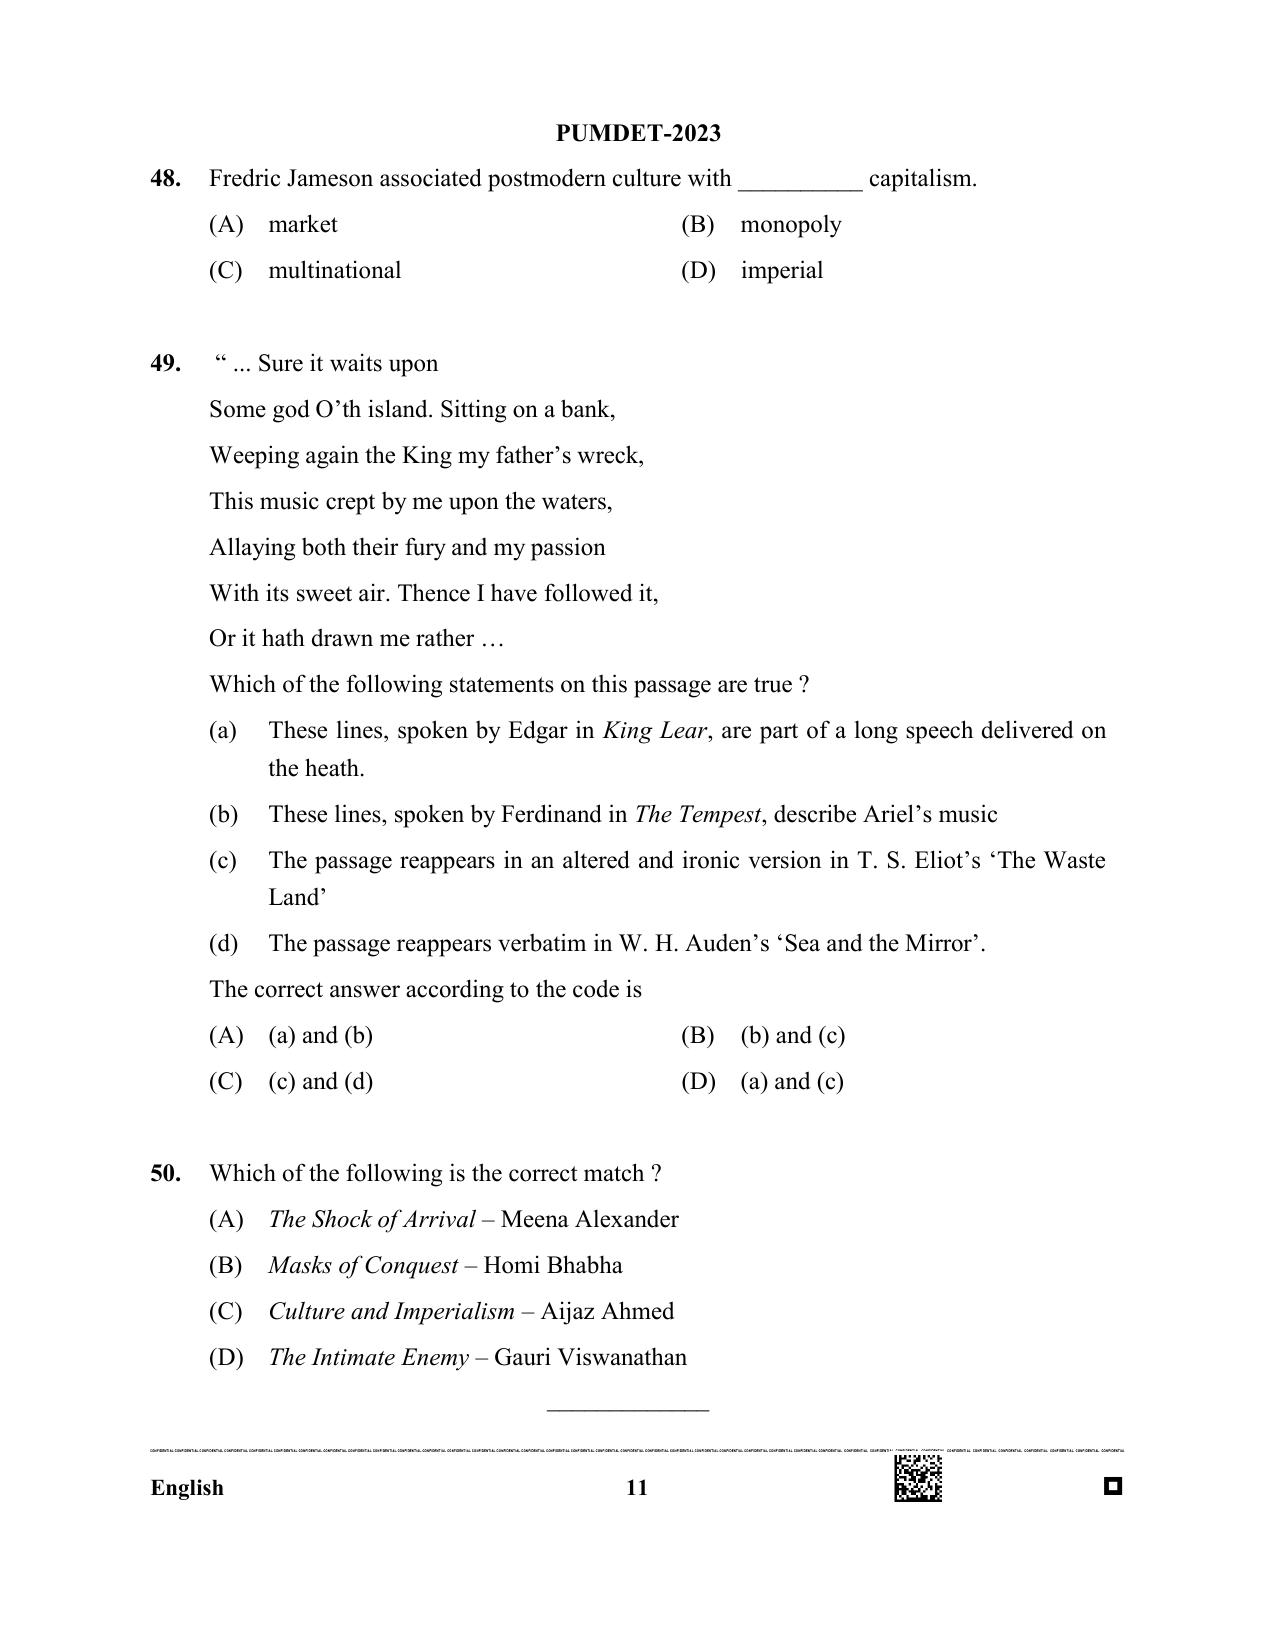 PUBDET 2023 English Question Paper - Page 11